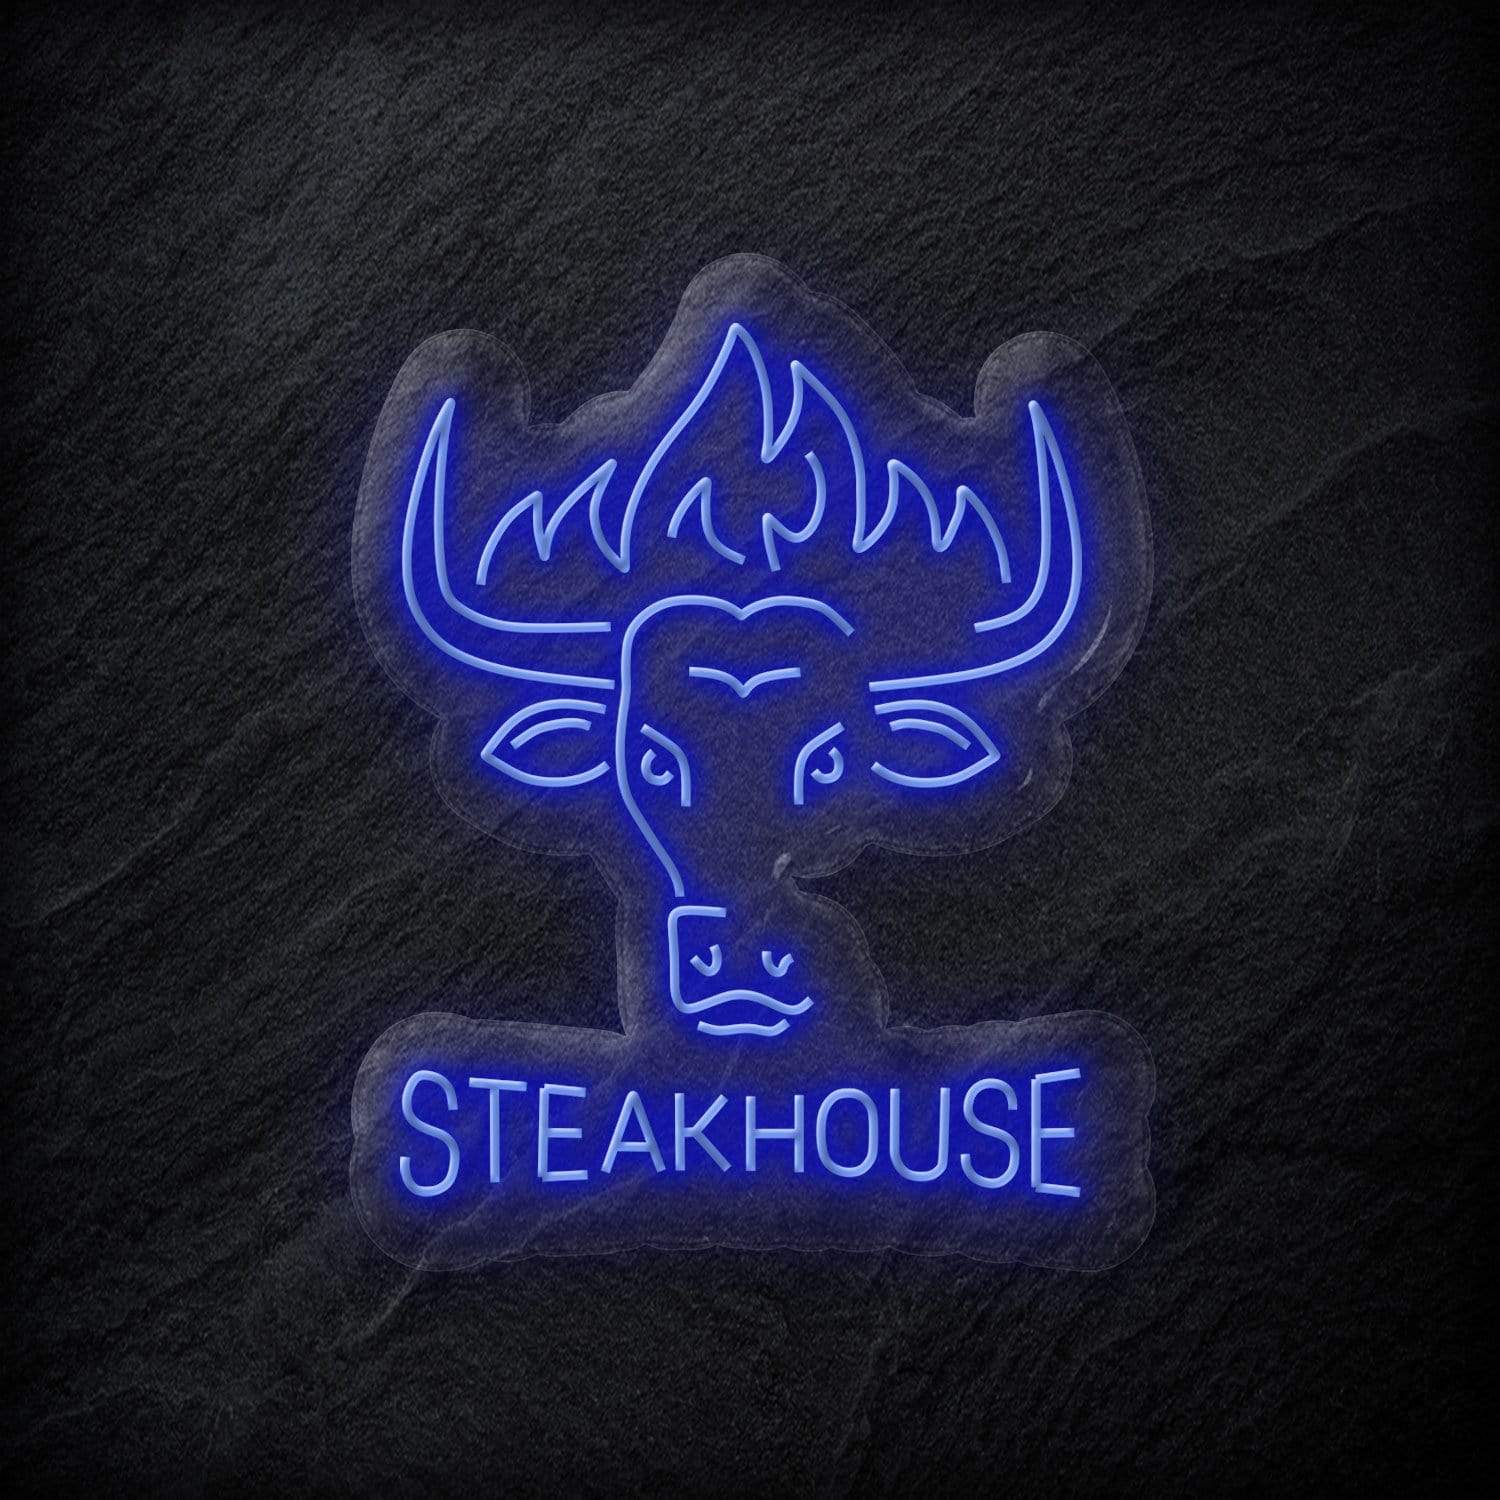 "Steakhouse Restaurant" LED Neon Schild - NEONEVERGLOW